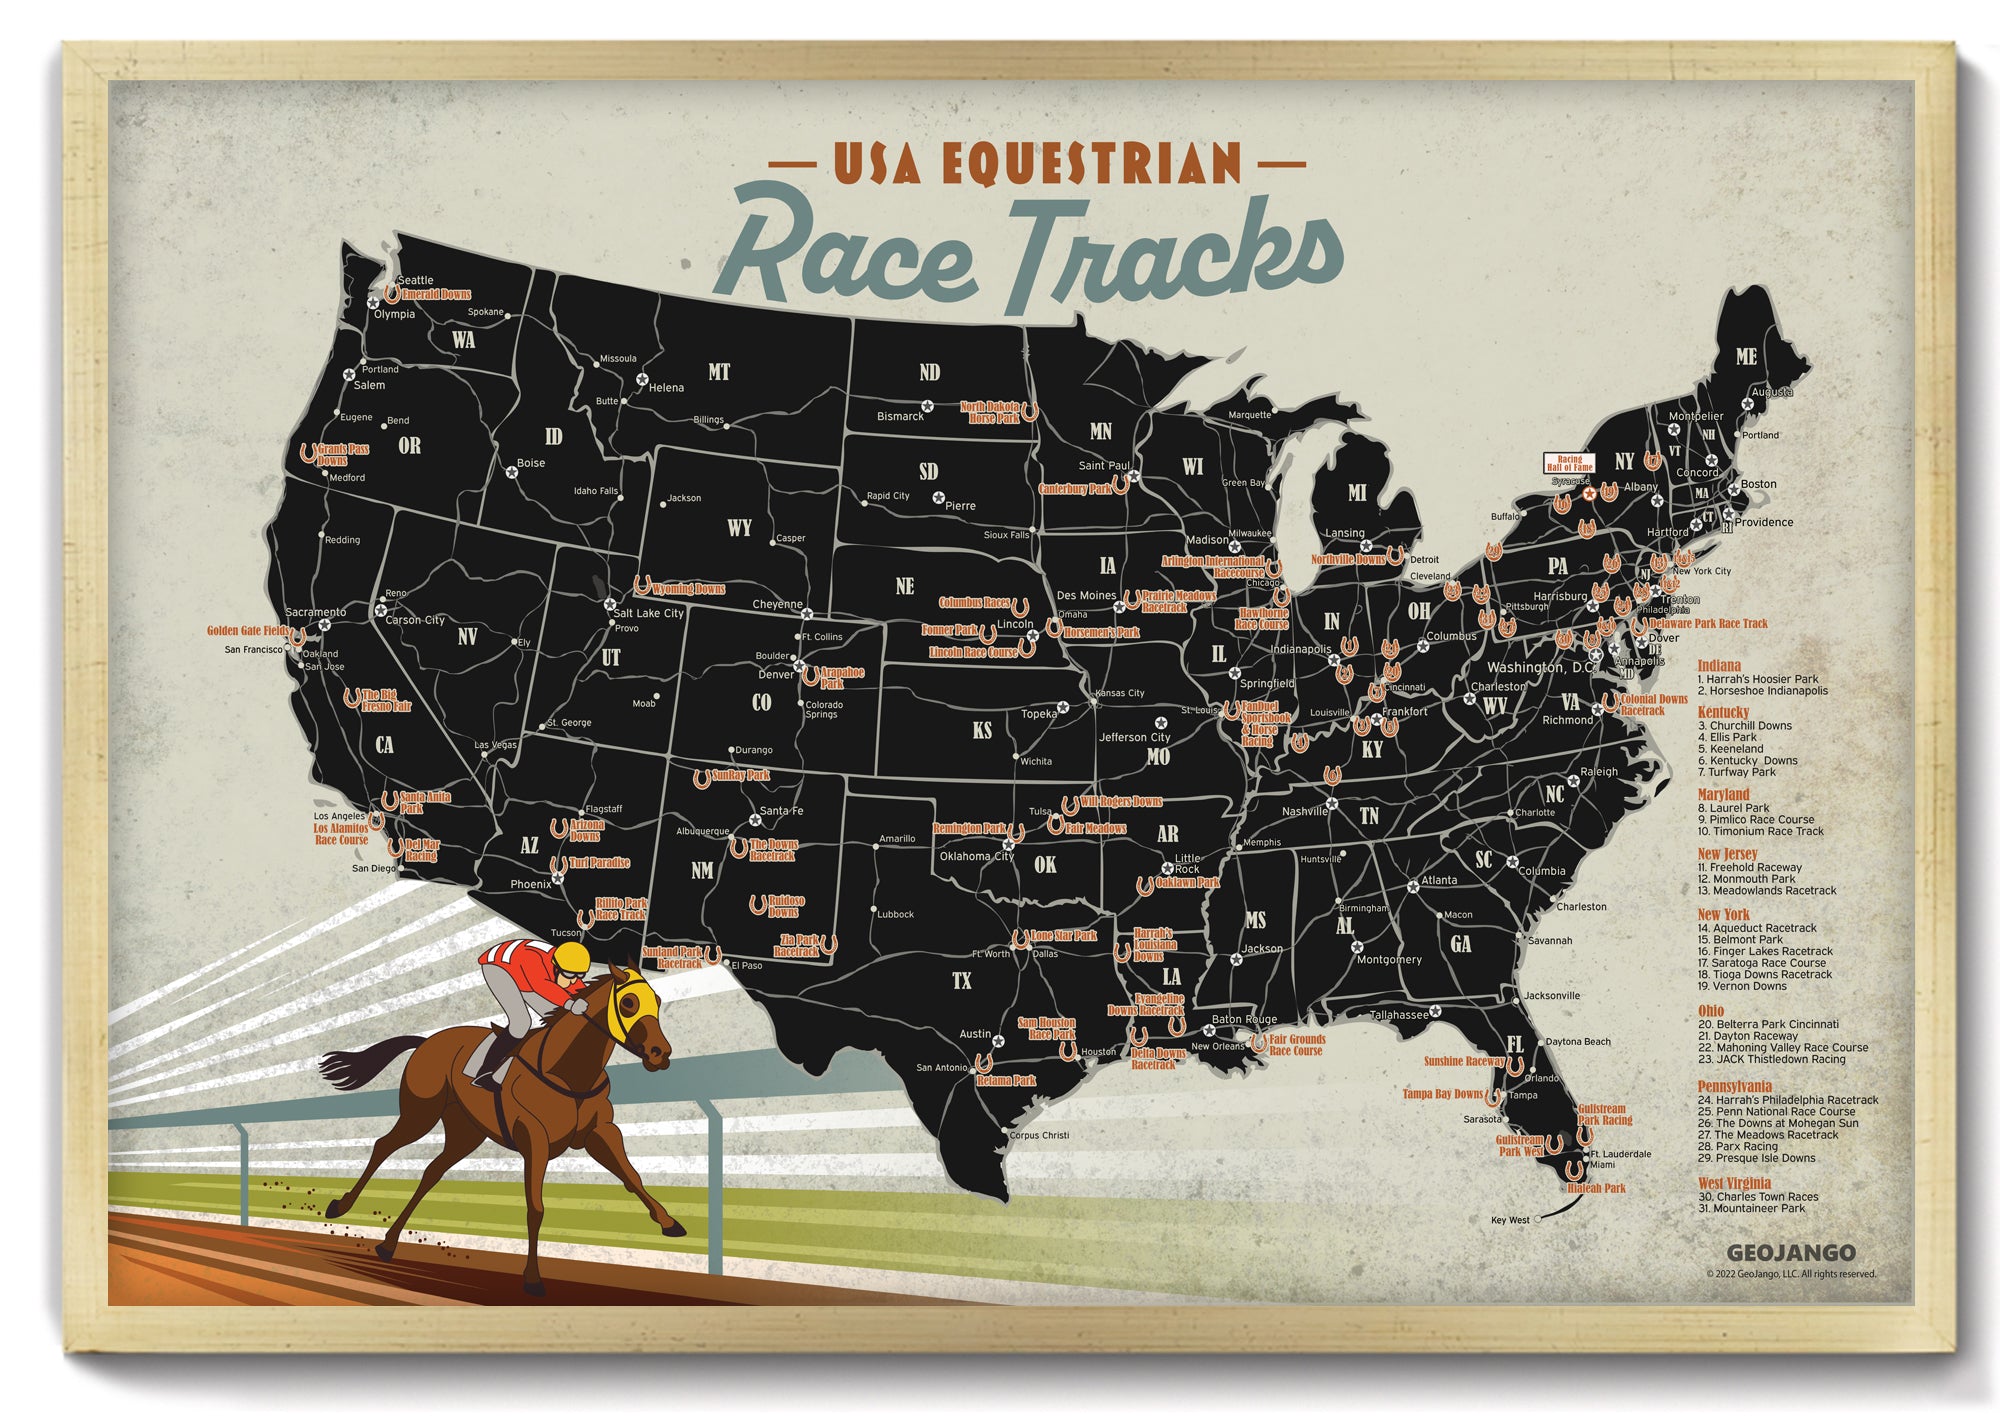 horse racing tracks